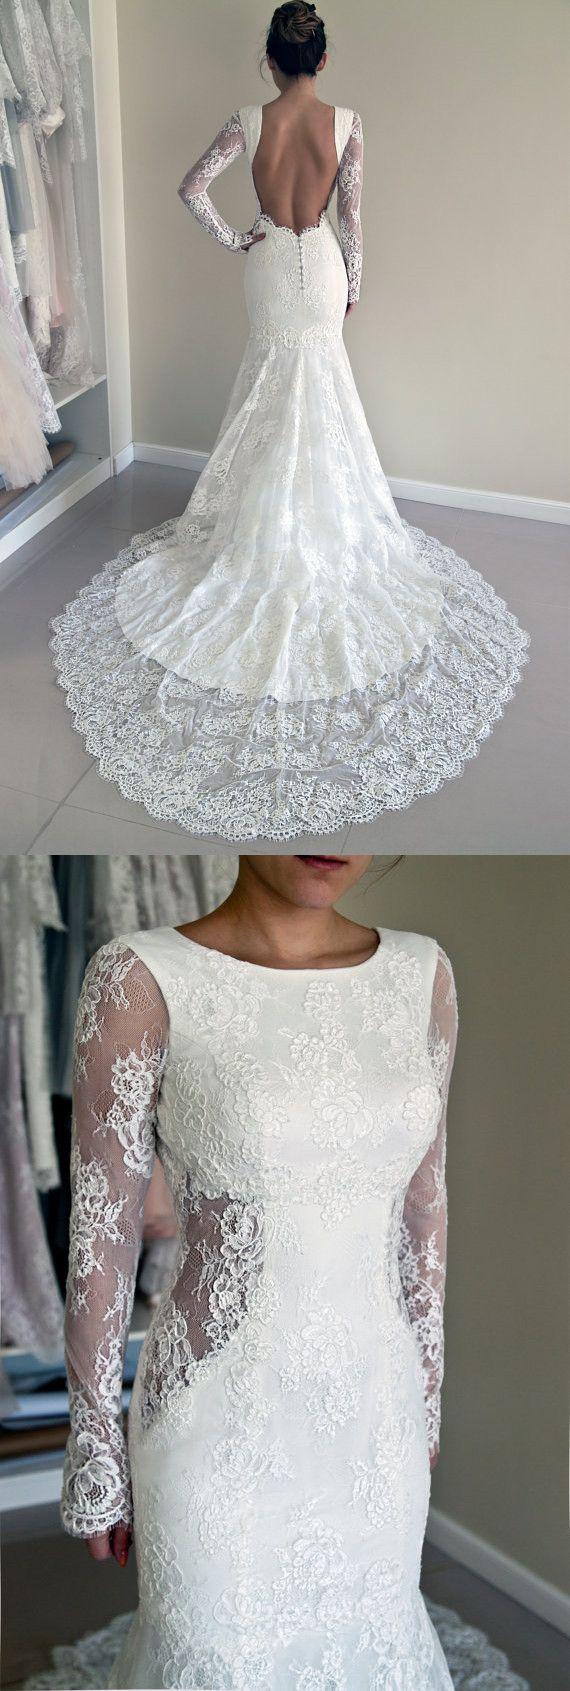 Wedding - Stunning Jewel Long Illusion Sleeves Court Train Sheath White Wedding Dress With Open Back